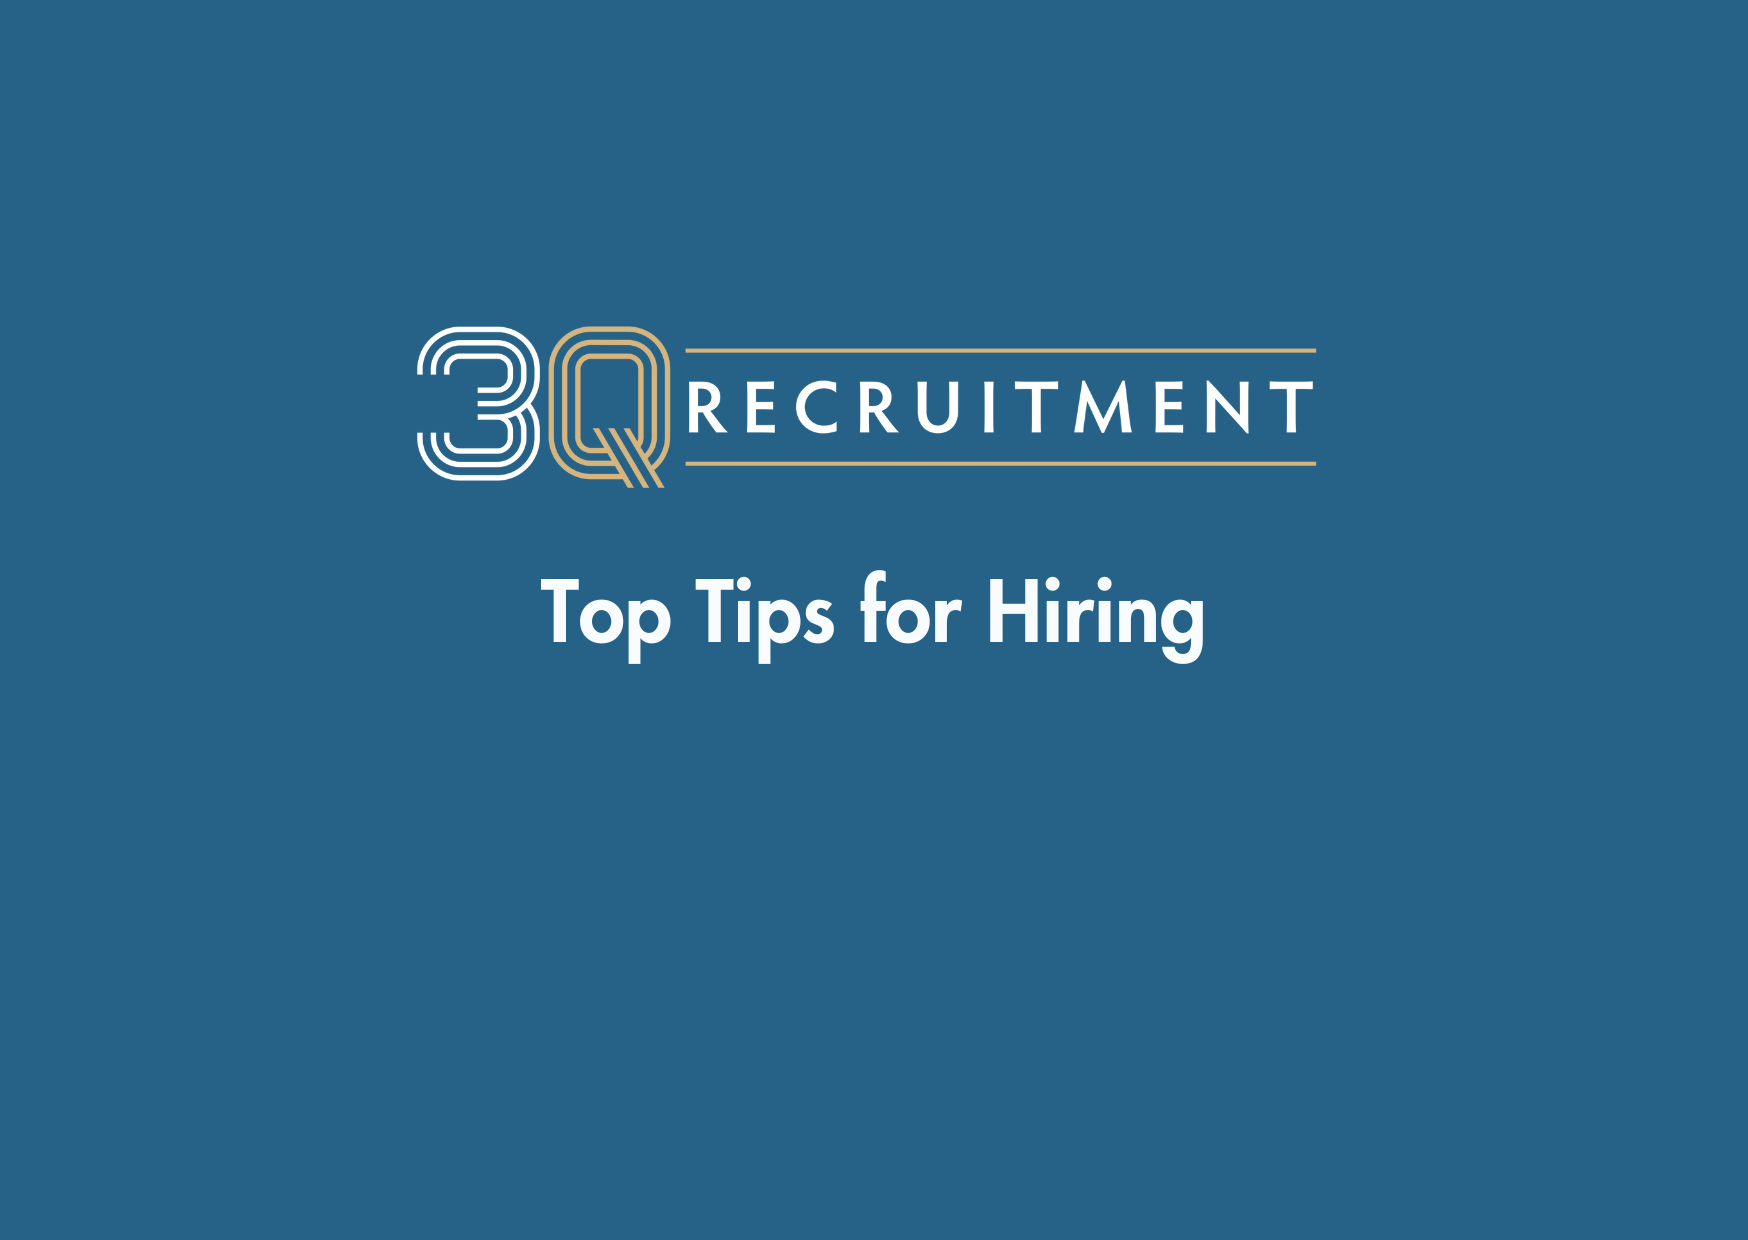 3Q Recruitment Top Tips for Hiring